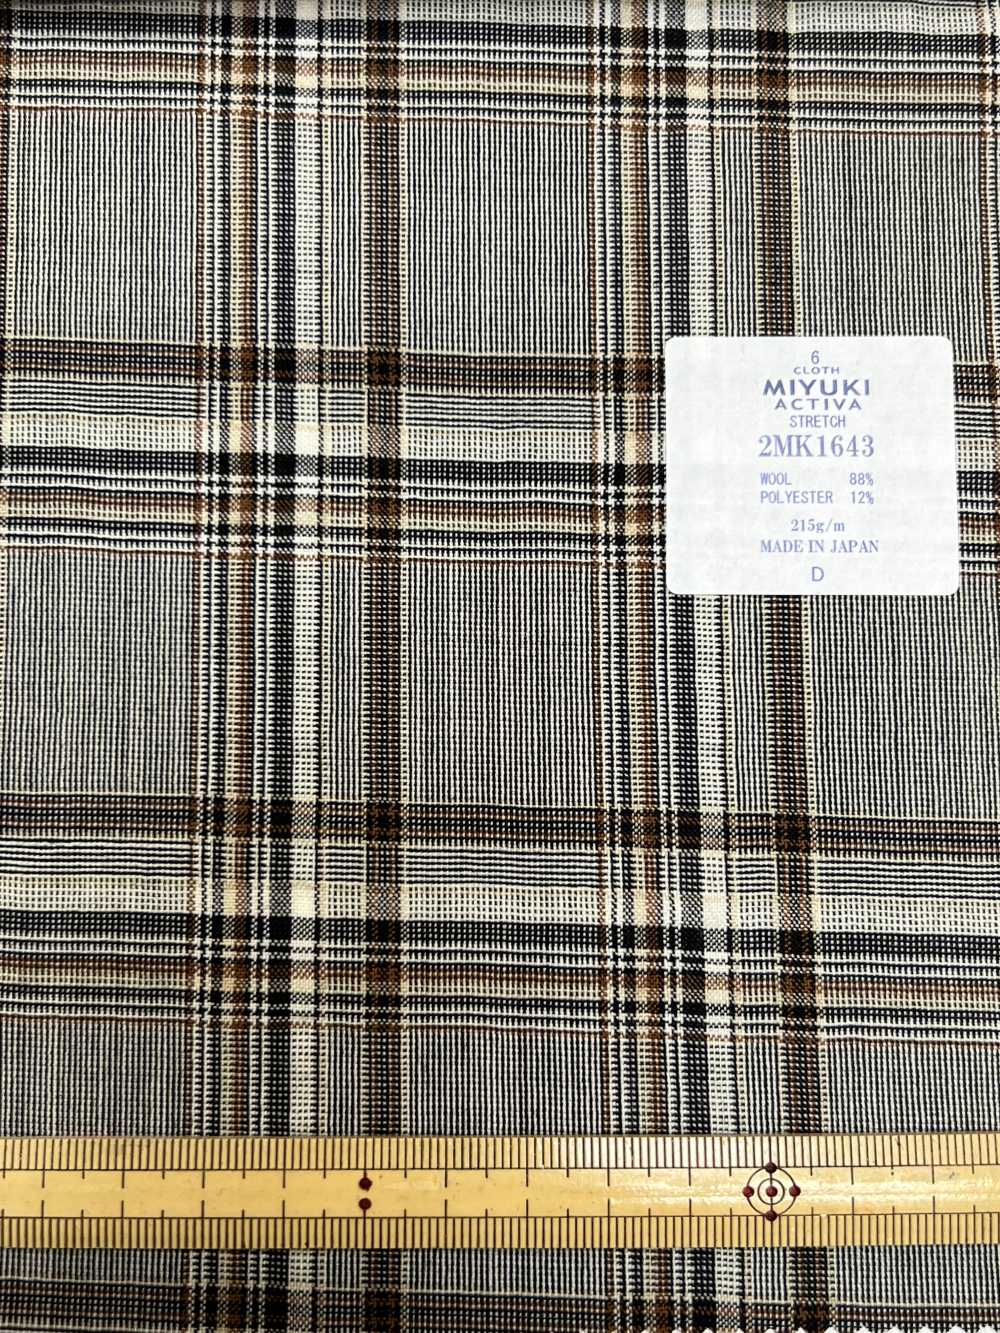 2MK1643 MIYUKI COMFORT ACTIVA STRETCH Marrón Claro[Textil] Miyuki Keori (Miyuki)